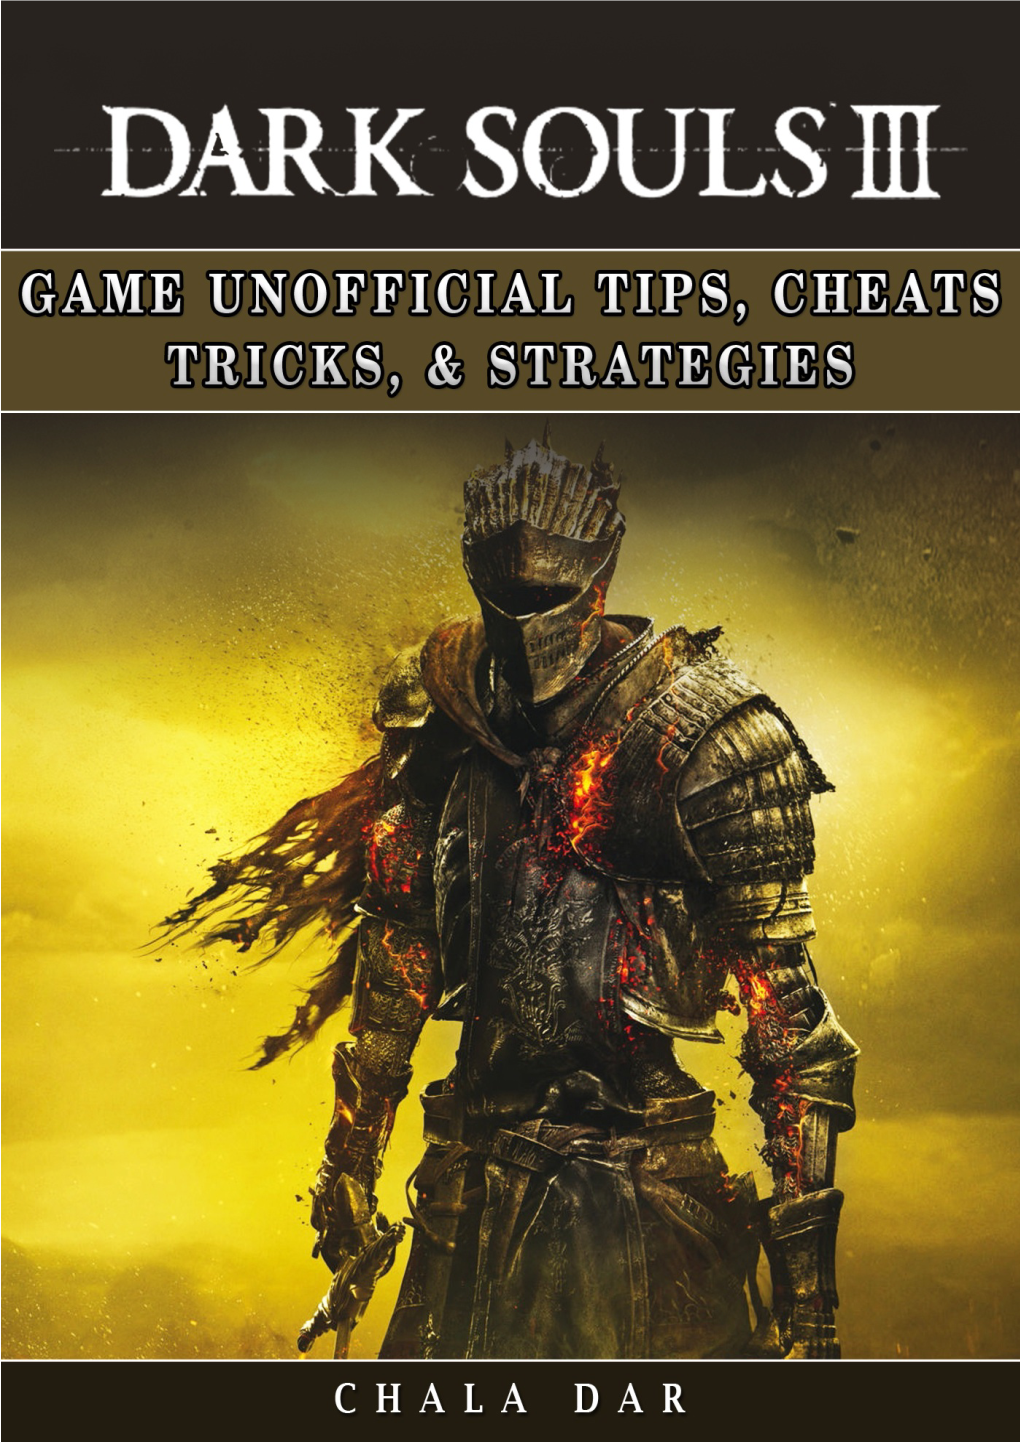 Dark Souls III Game Unofficial Tips, Cheats Tricks, & Strategies